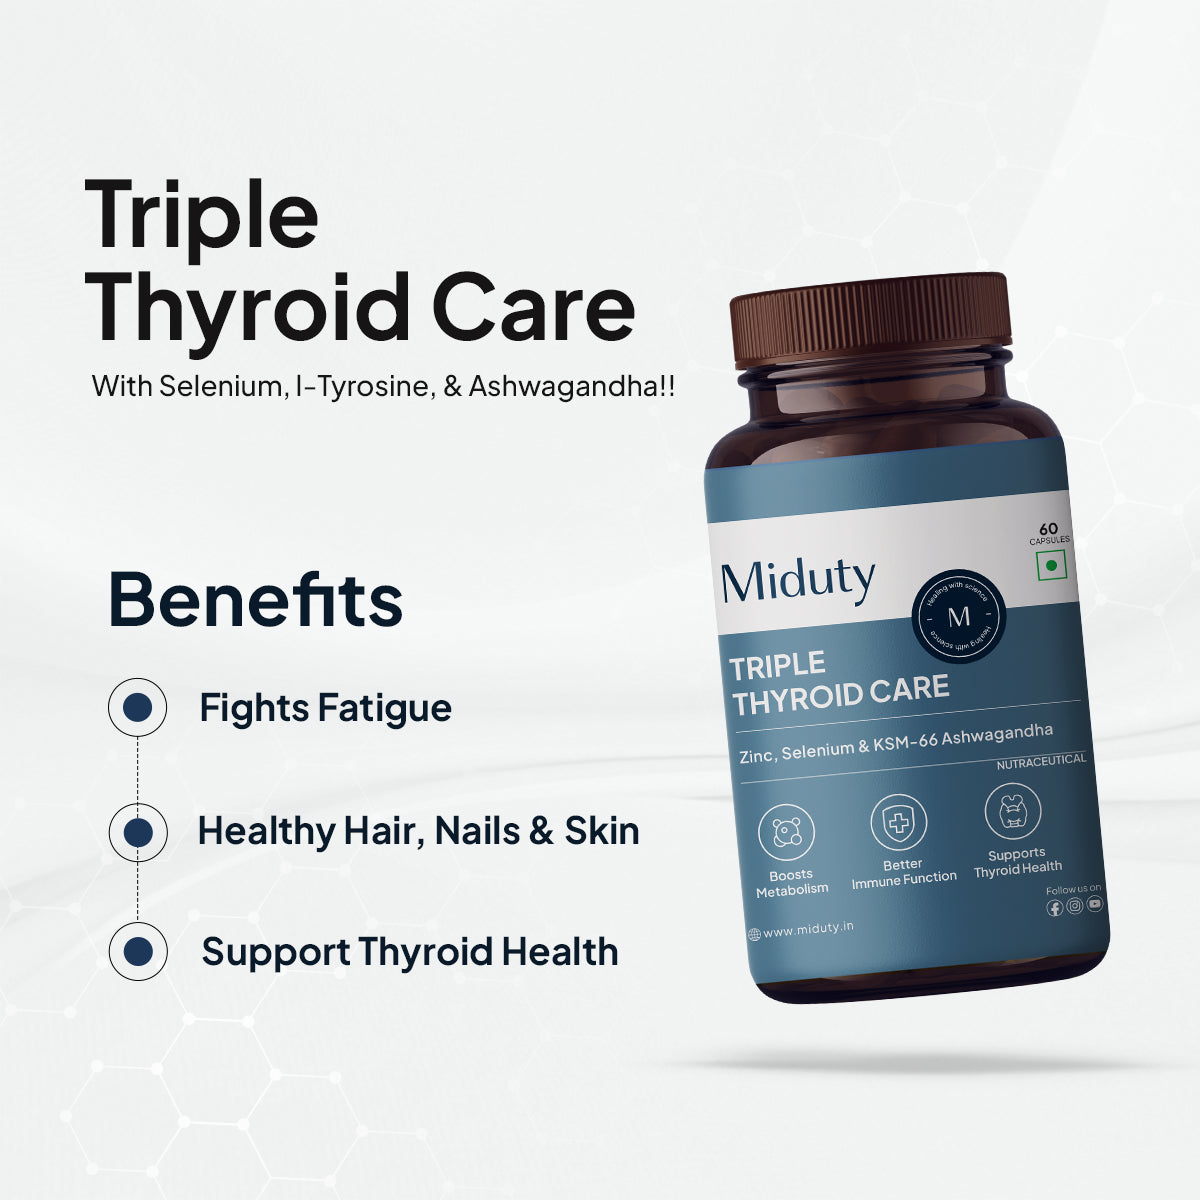 Triple Thyroid Care